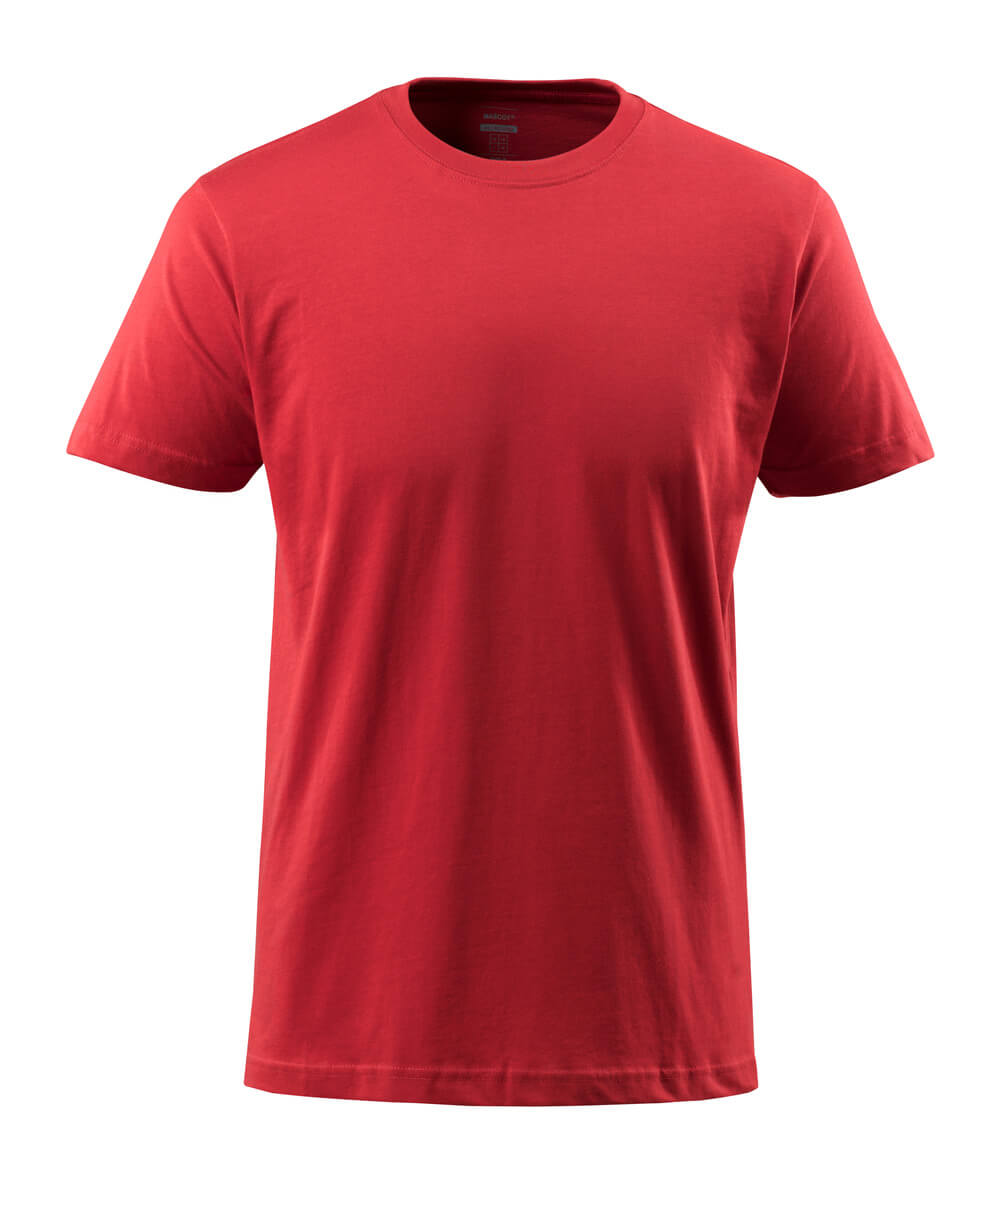 51579-965-02 Camiseta - rojo